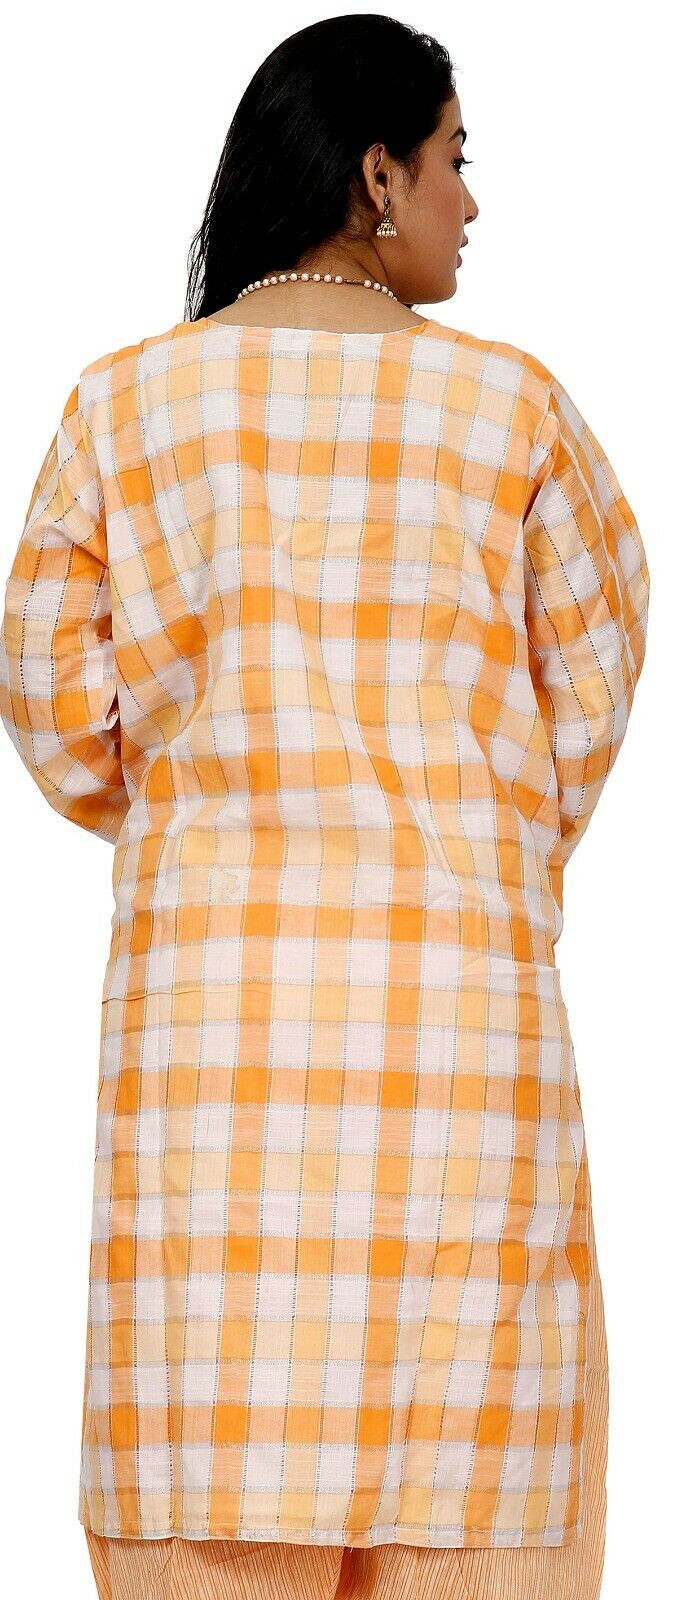 Orange Cotton  Designer Ethnic  Full Sleeves  Salwar kameez chest size 52